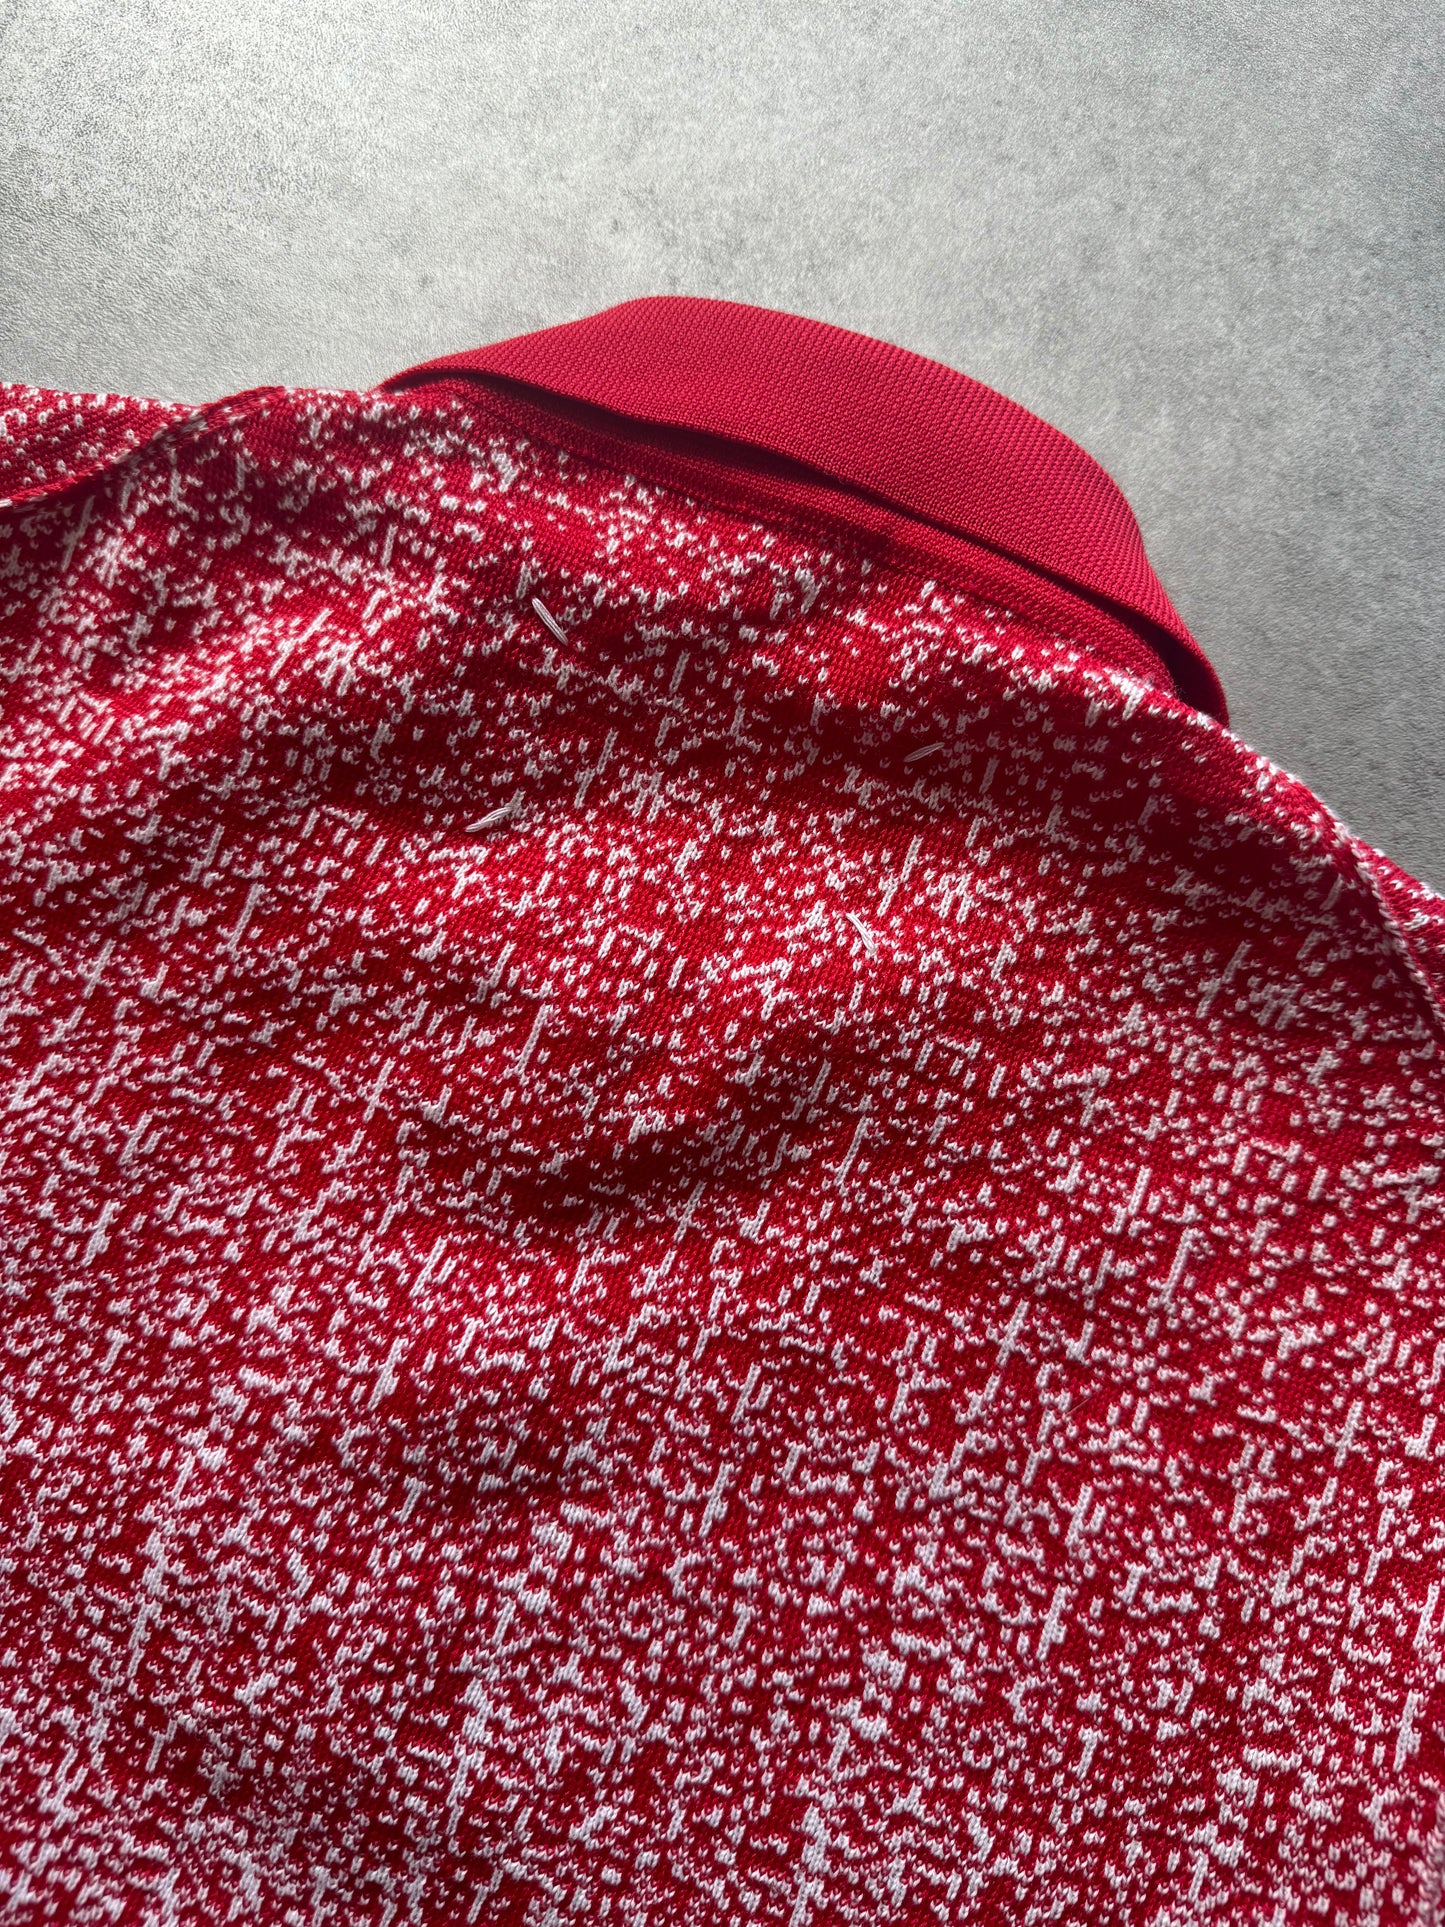 SS2017 Maison Margiela Pixelized Red Human Polo Shirt (S) - 5